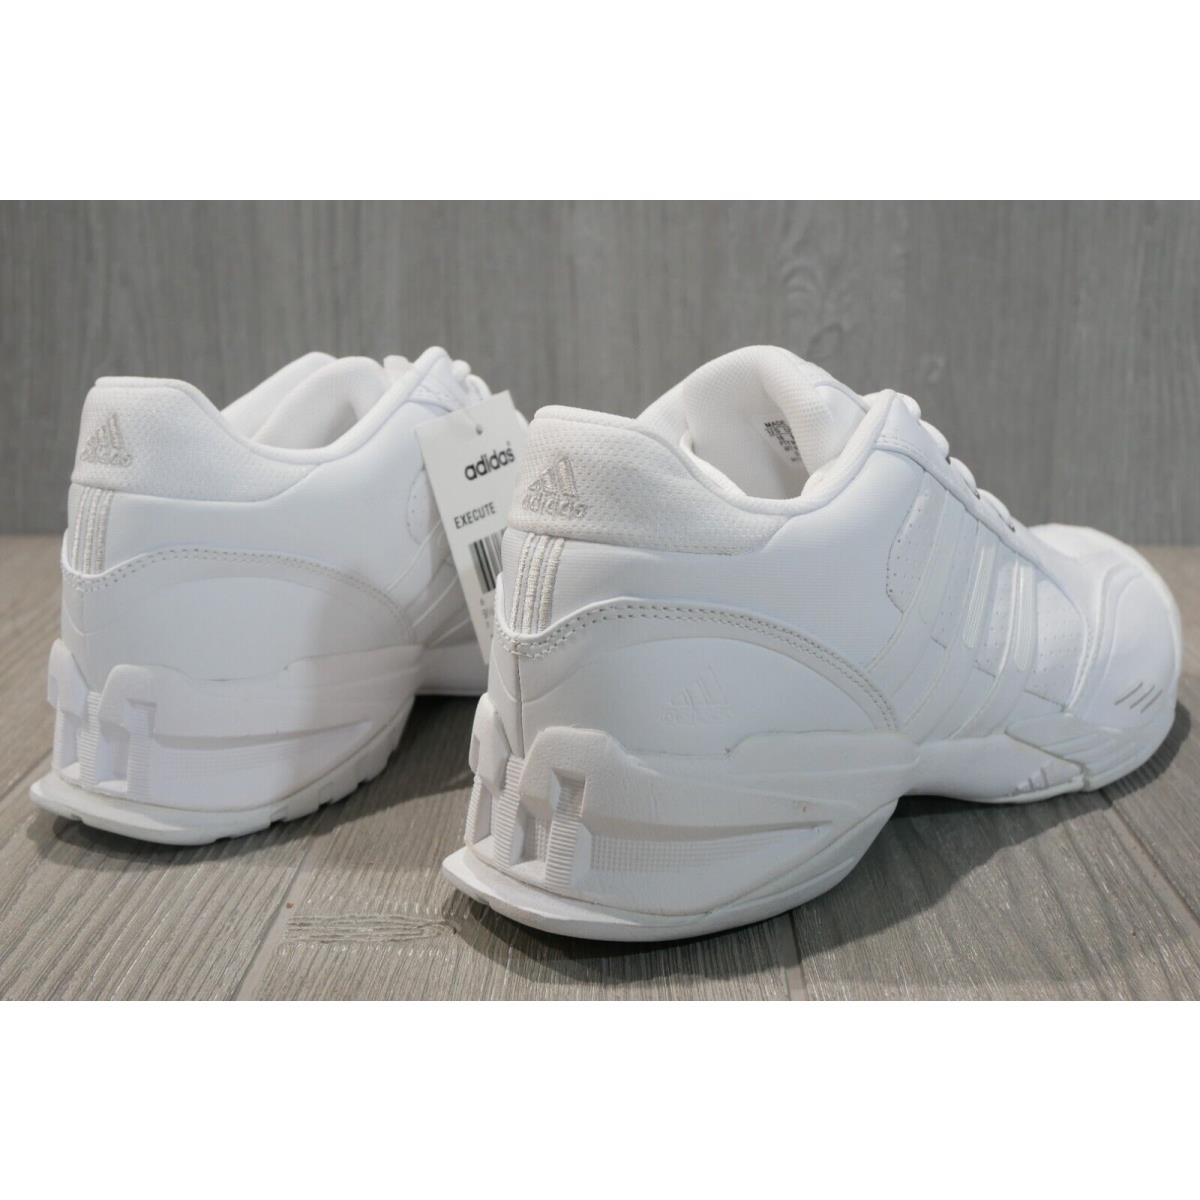 Adidas shoes Vintage - White 2